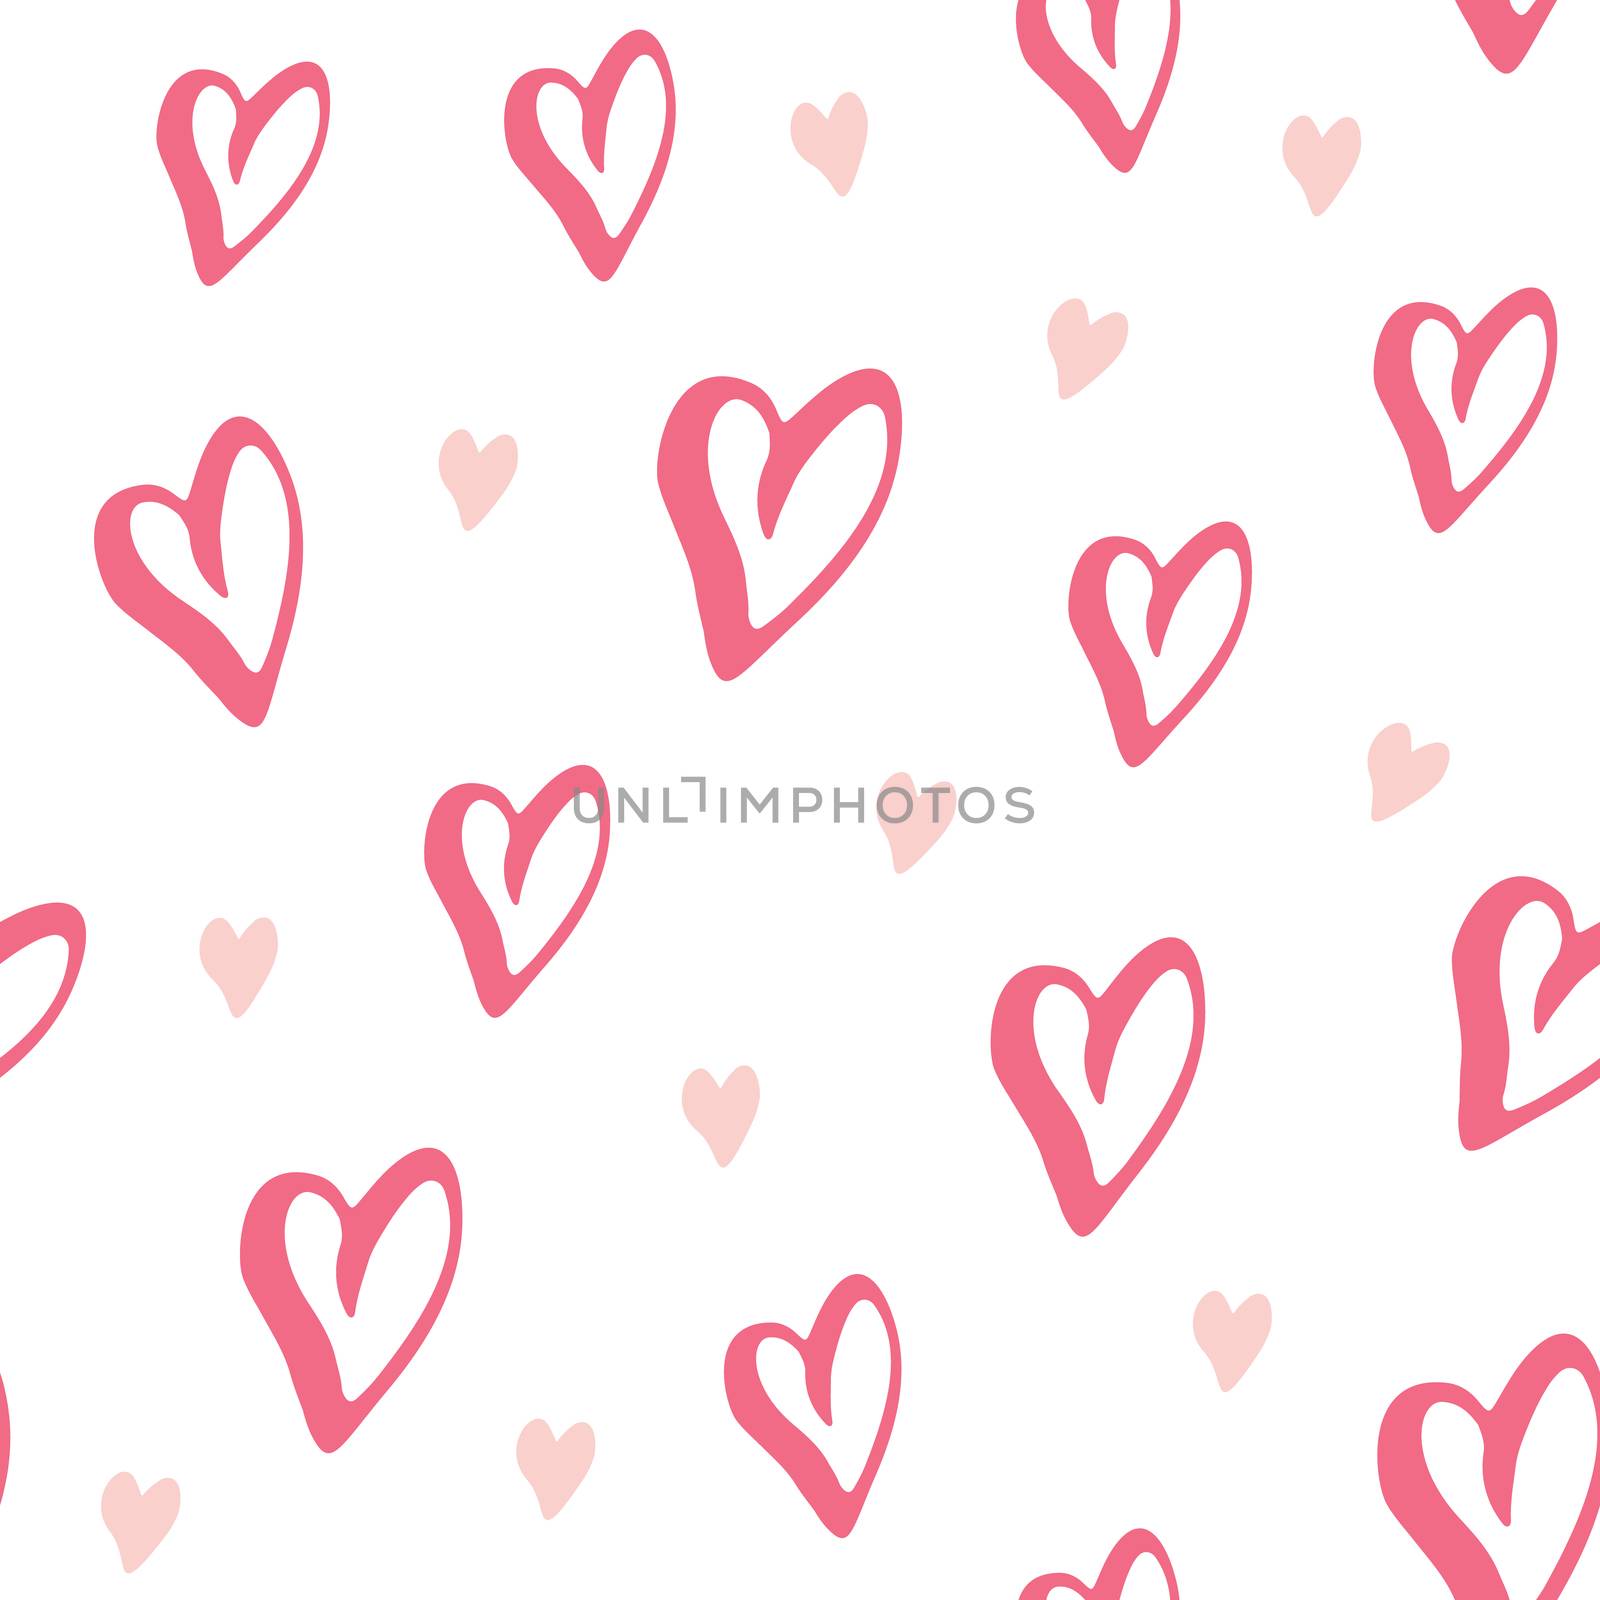 Heart symbol seamless pattern vector illustration. Hand drawn sketch doodle background. Saint Valentines Day or women's day background by Lemon_workshop